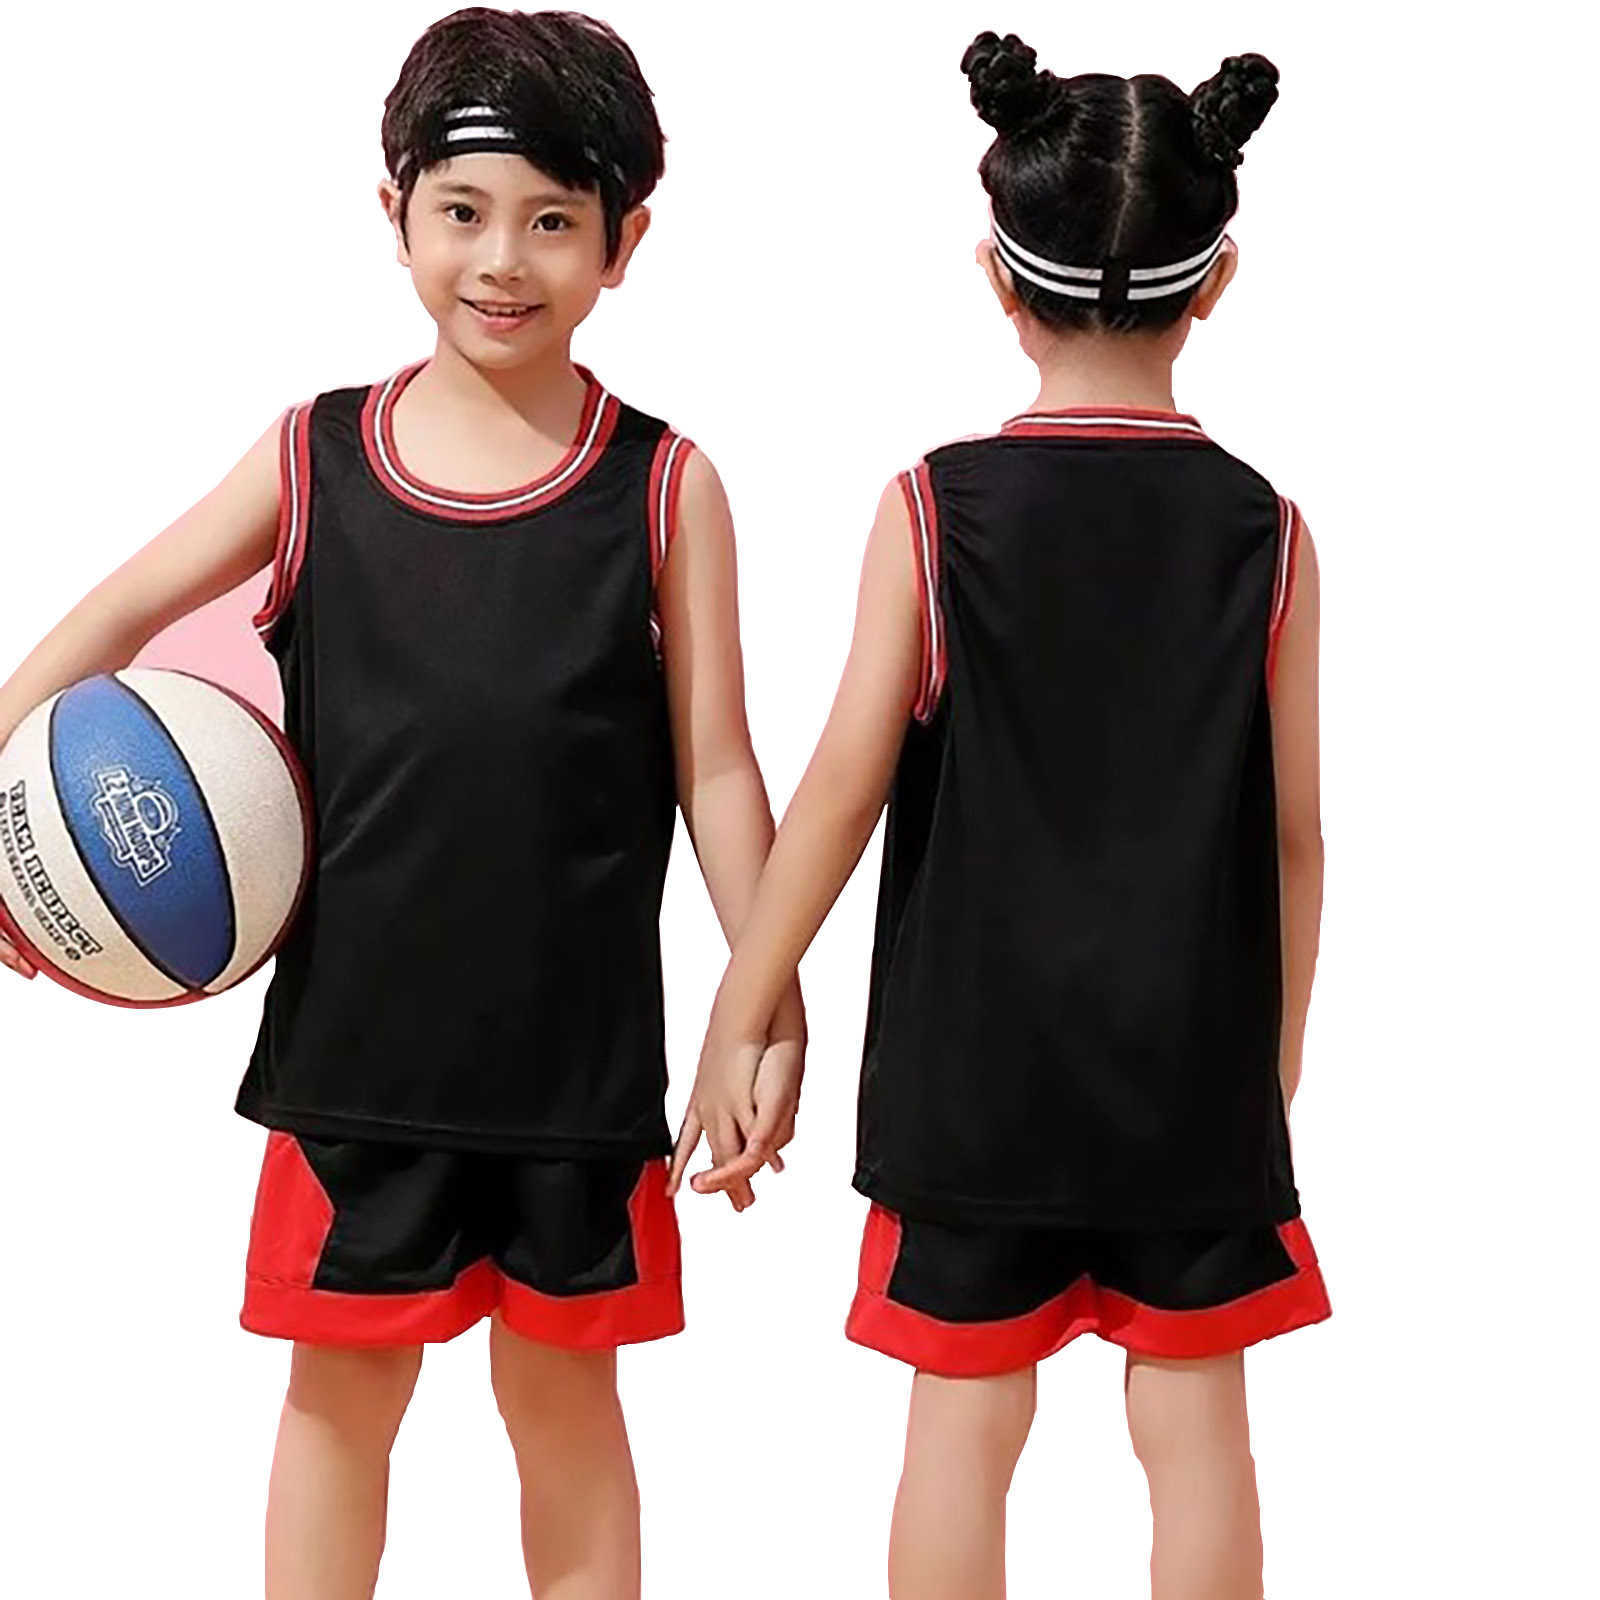 T-shirts Student Football Uniform Tracksuit Child's Sports Jerseys Kids Boys Girl Team Basketball Jersey Suit Soccer Clothes Uniform x0628